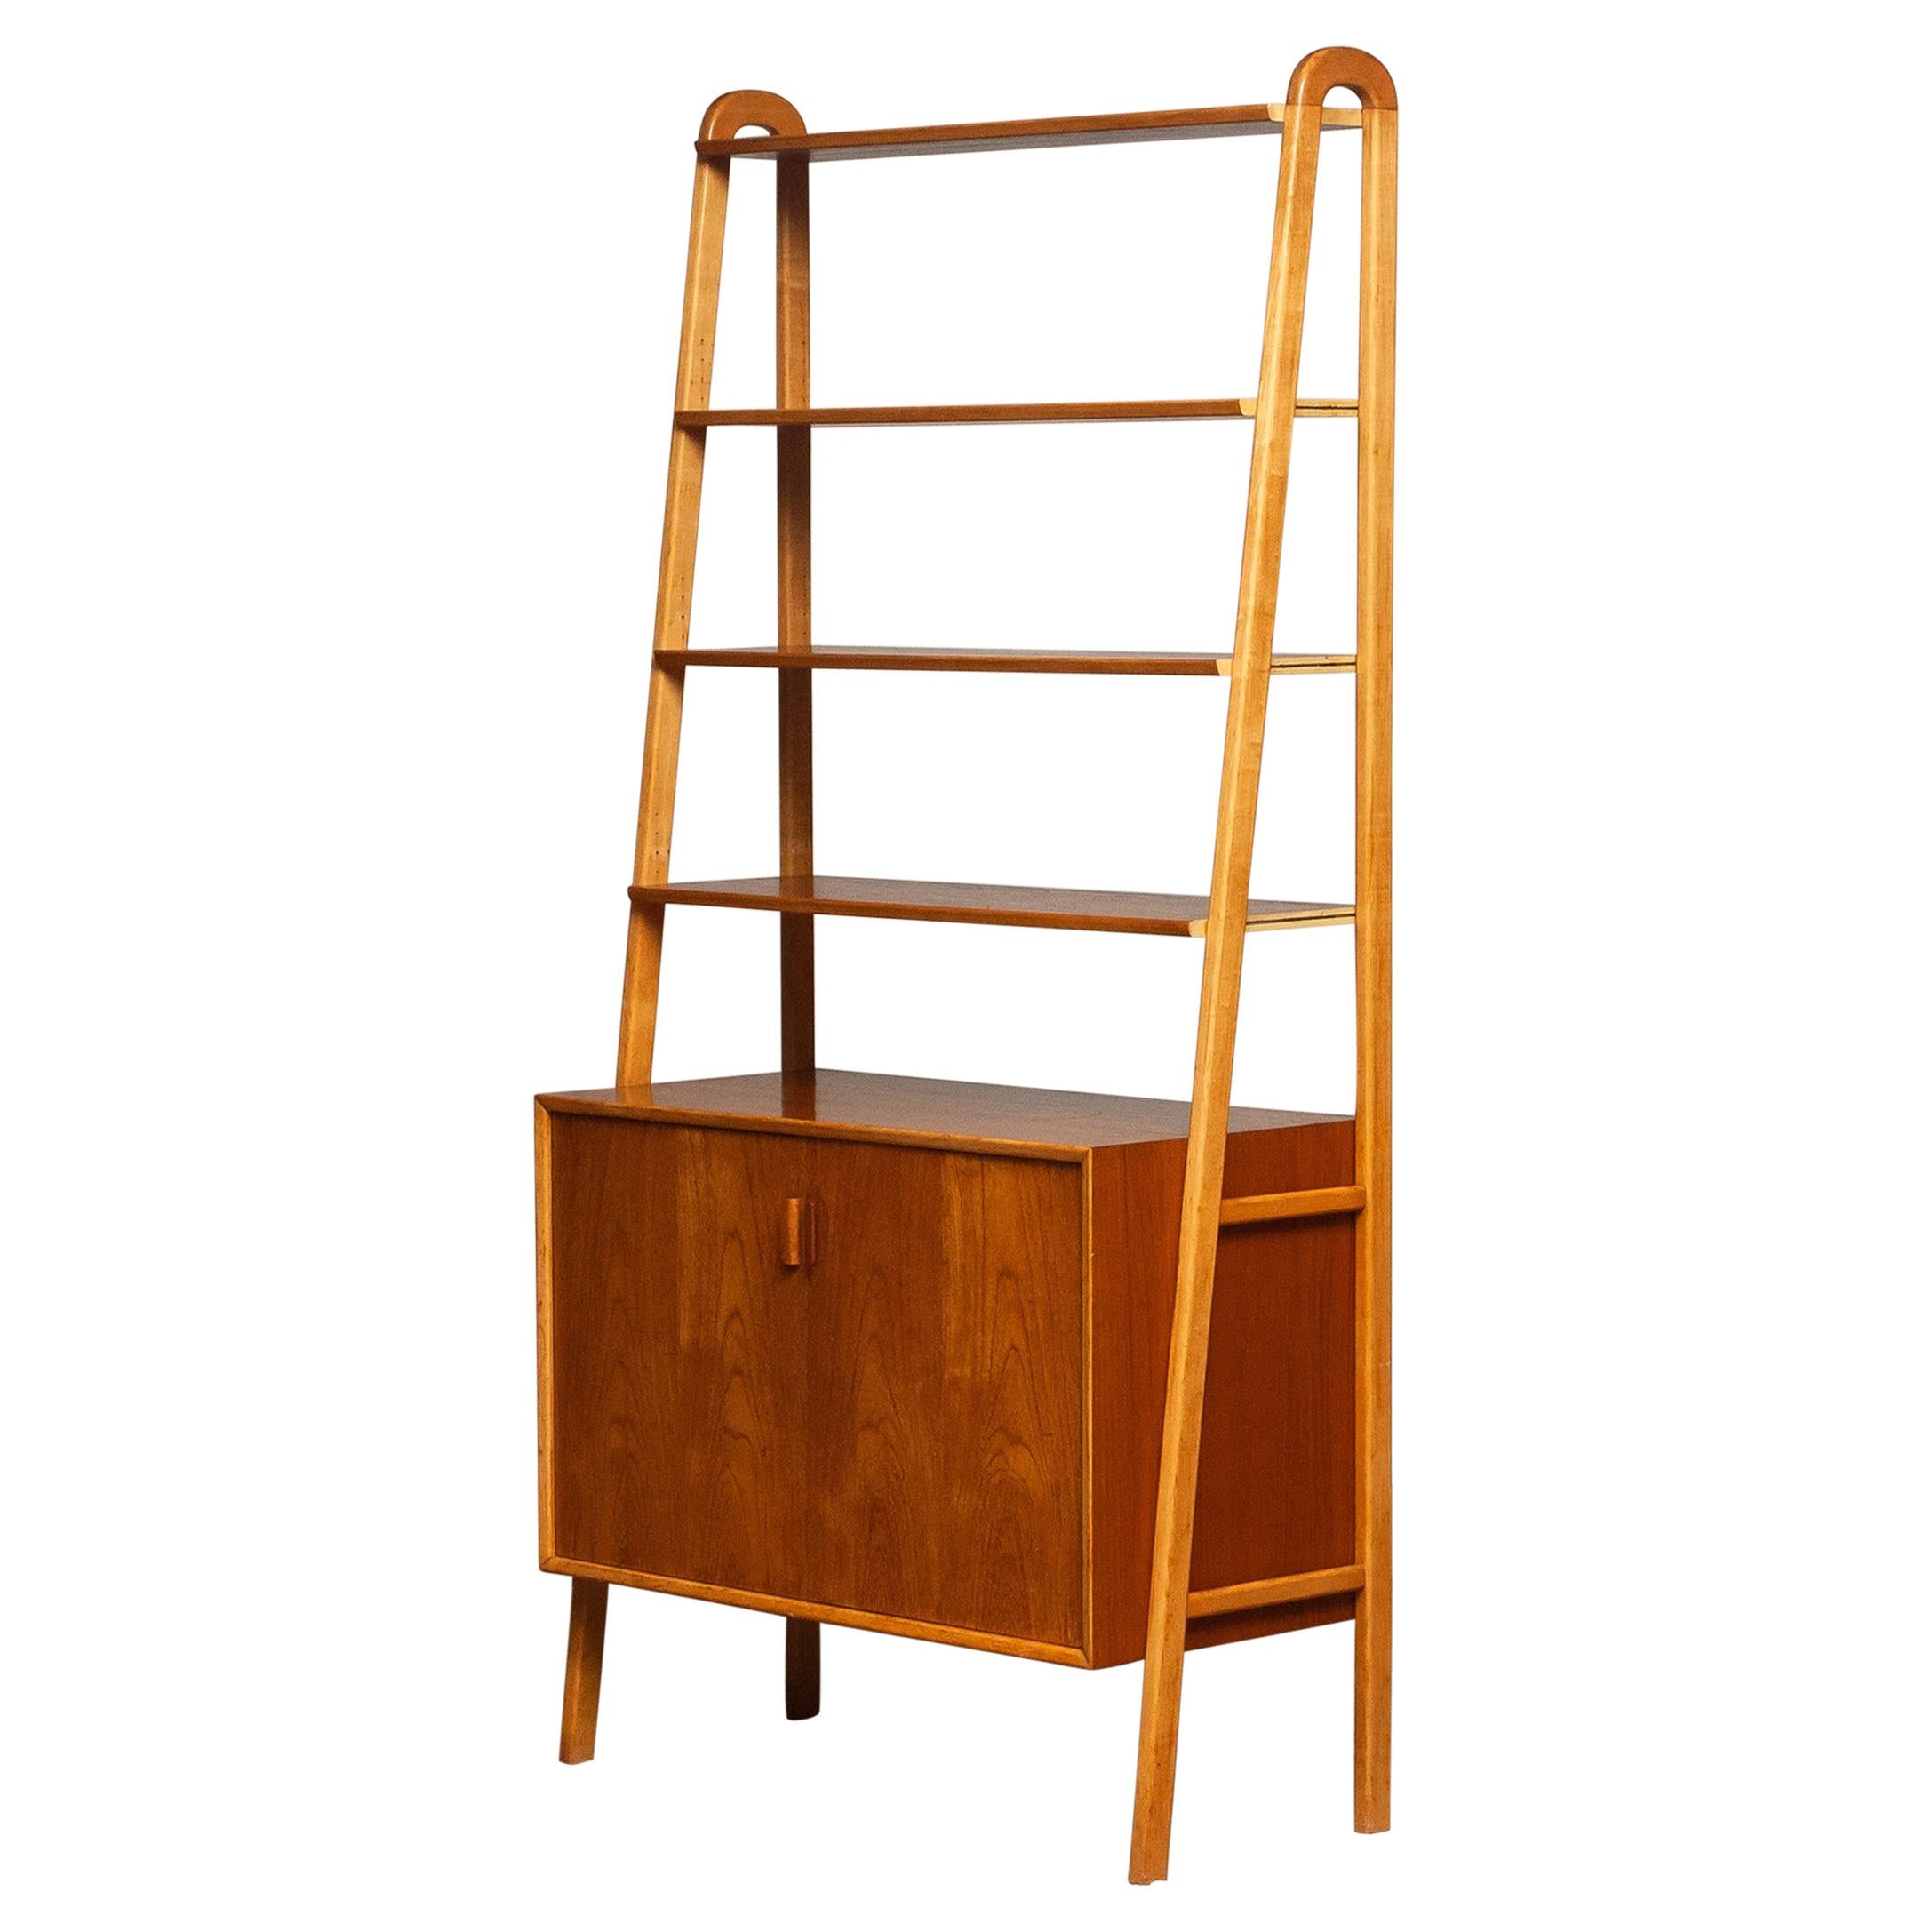 1950s Slim Shelfs / Bookcase / Sideboard in Teak and Beech by Brantorps, Sweden